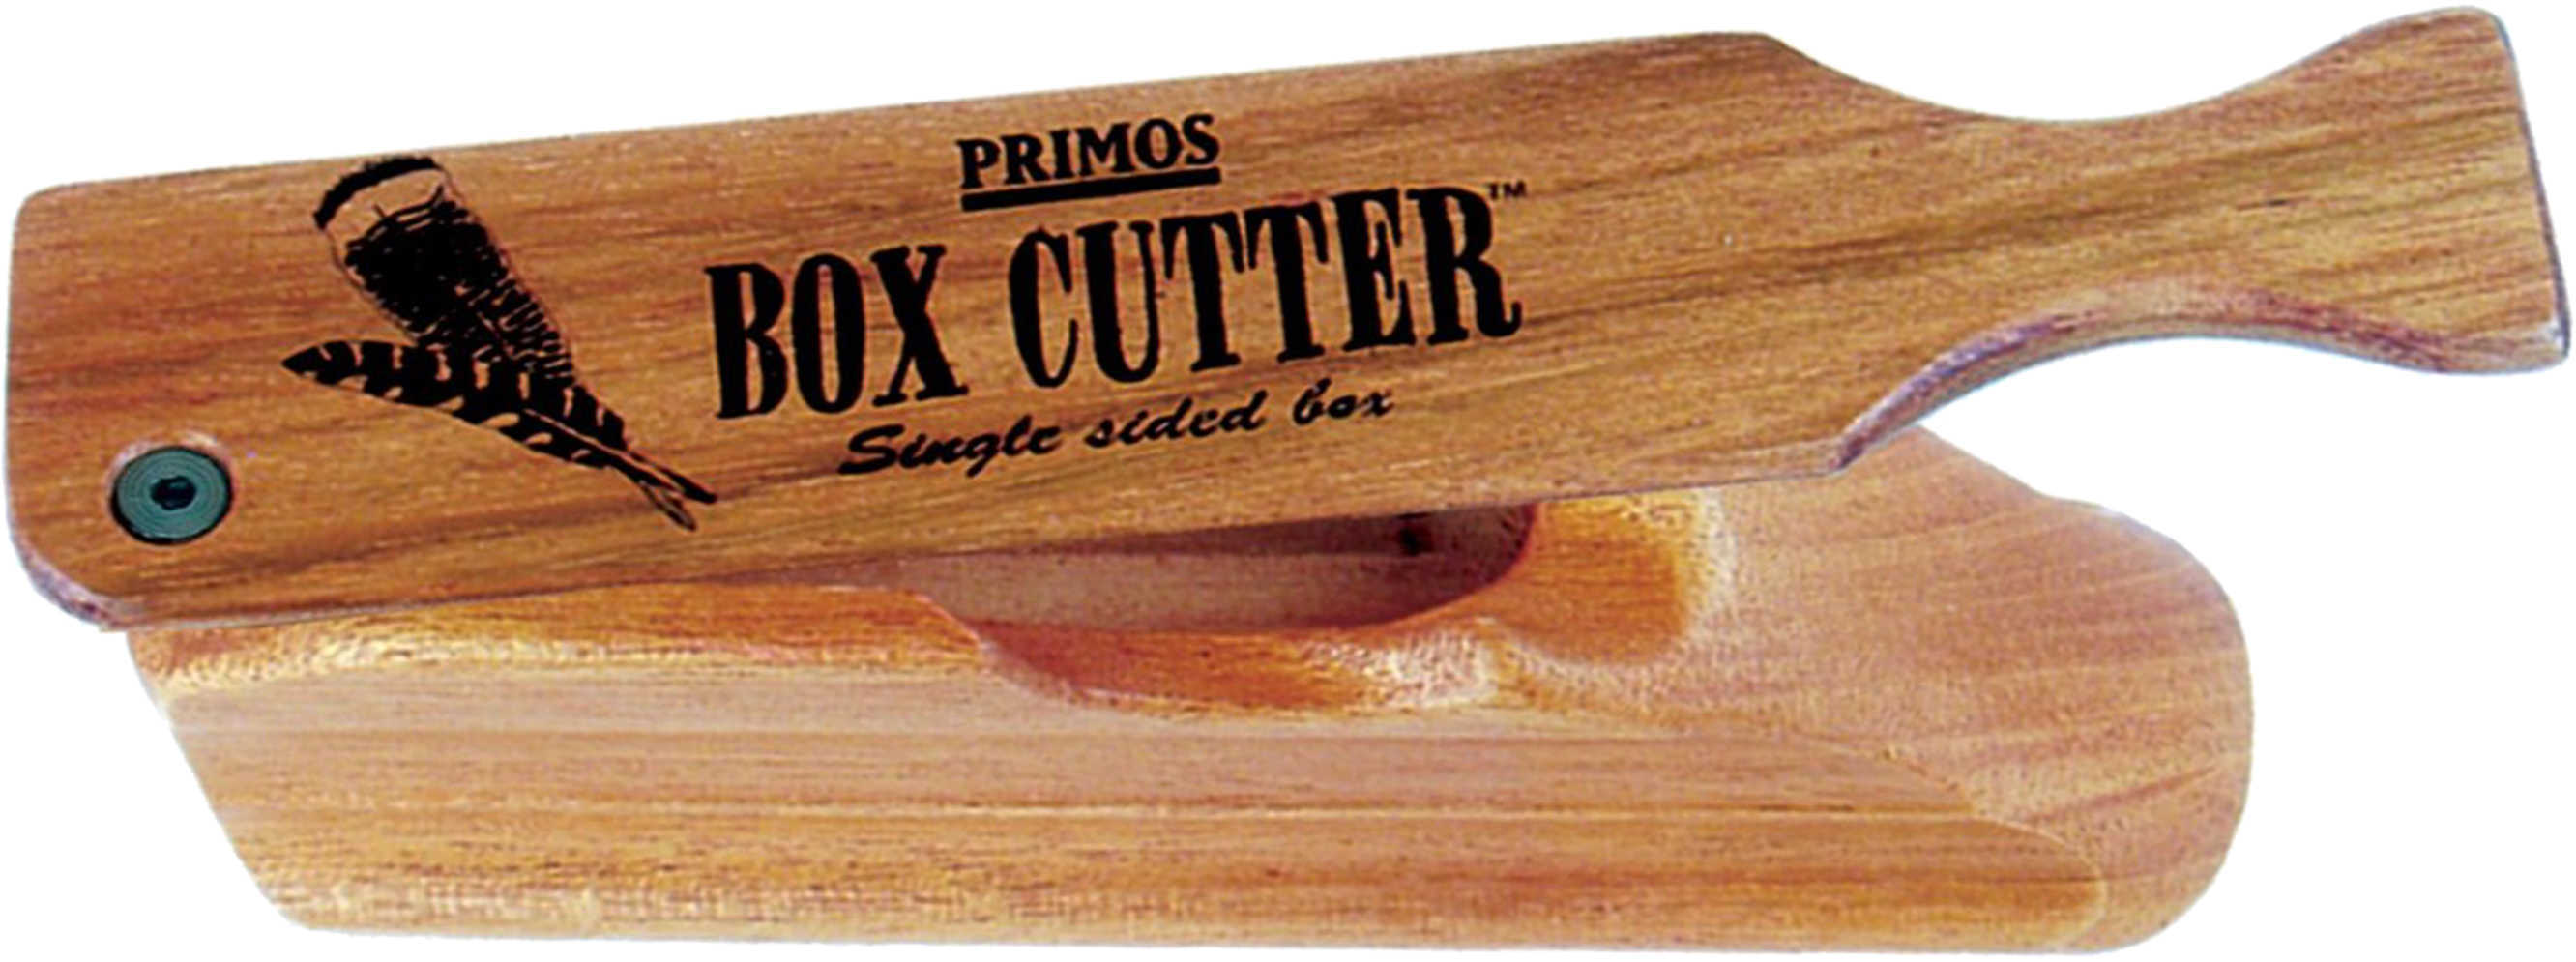 Primos Box Cutter Turkey Call Model: 243